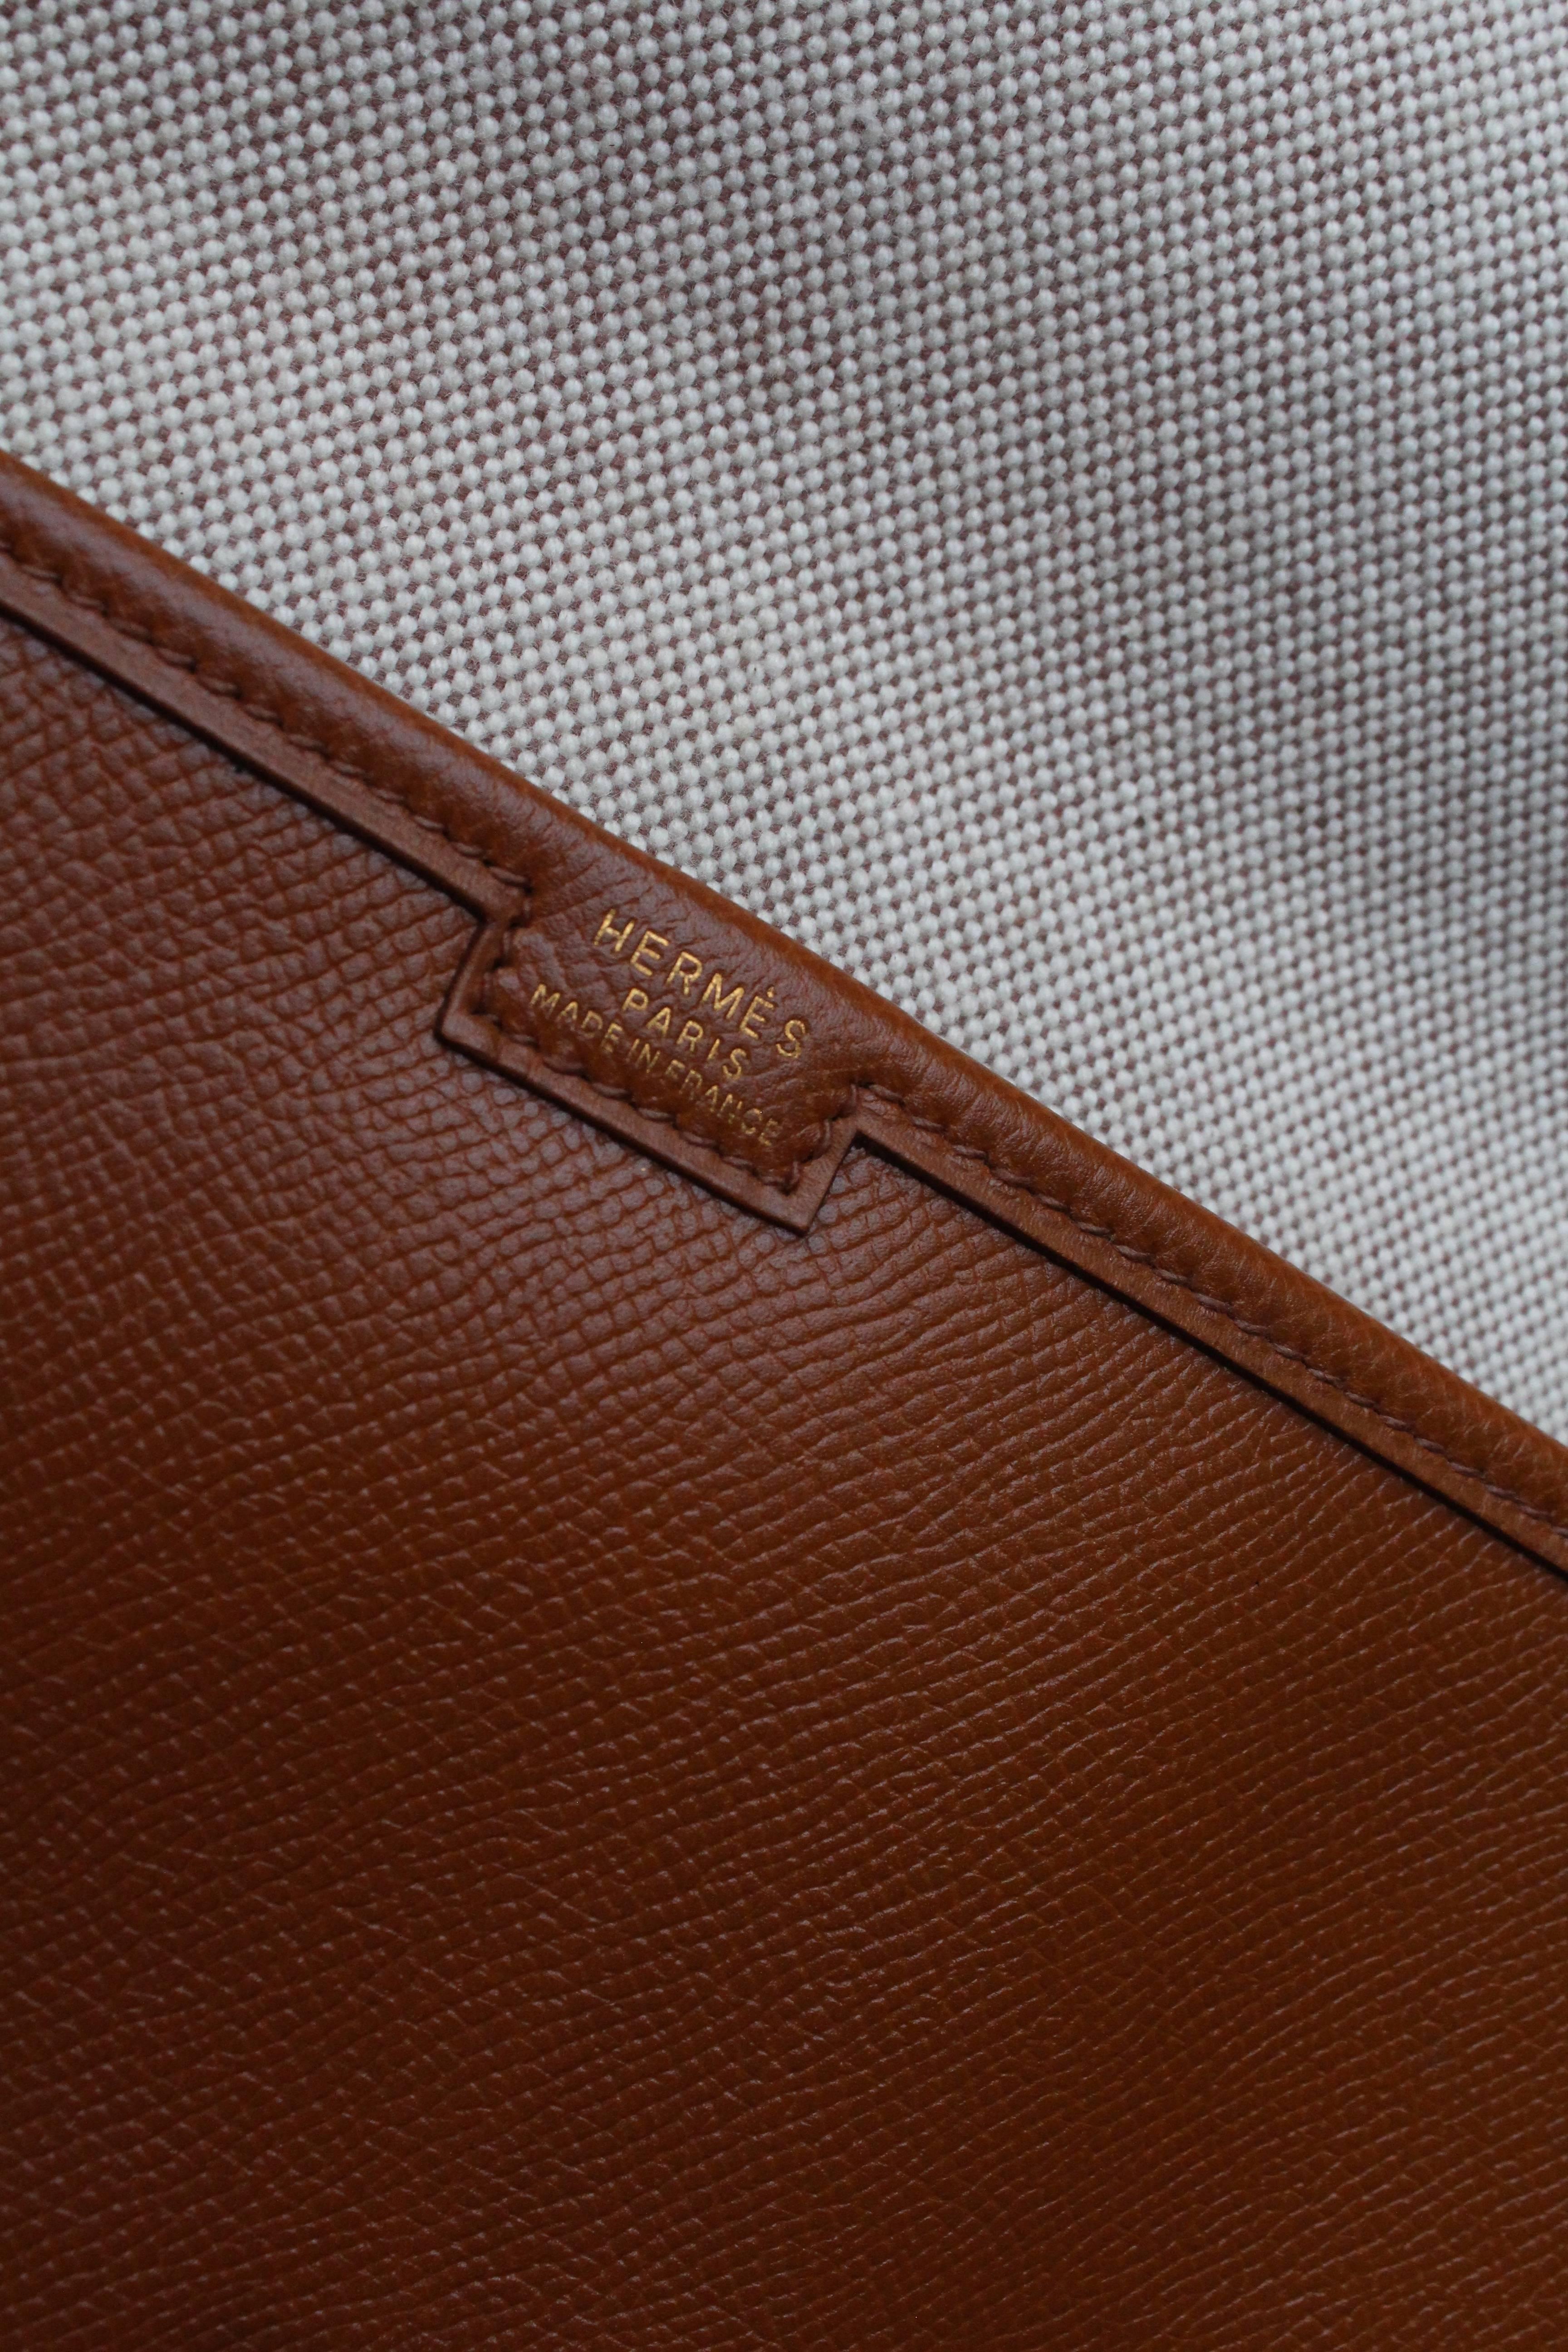 Hermès “Jige” model clutch in tan togo leather 2